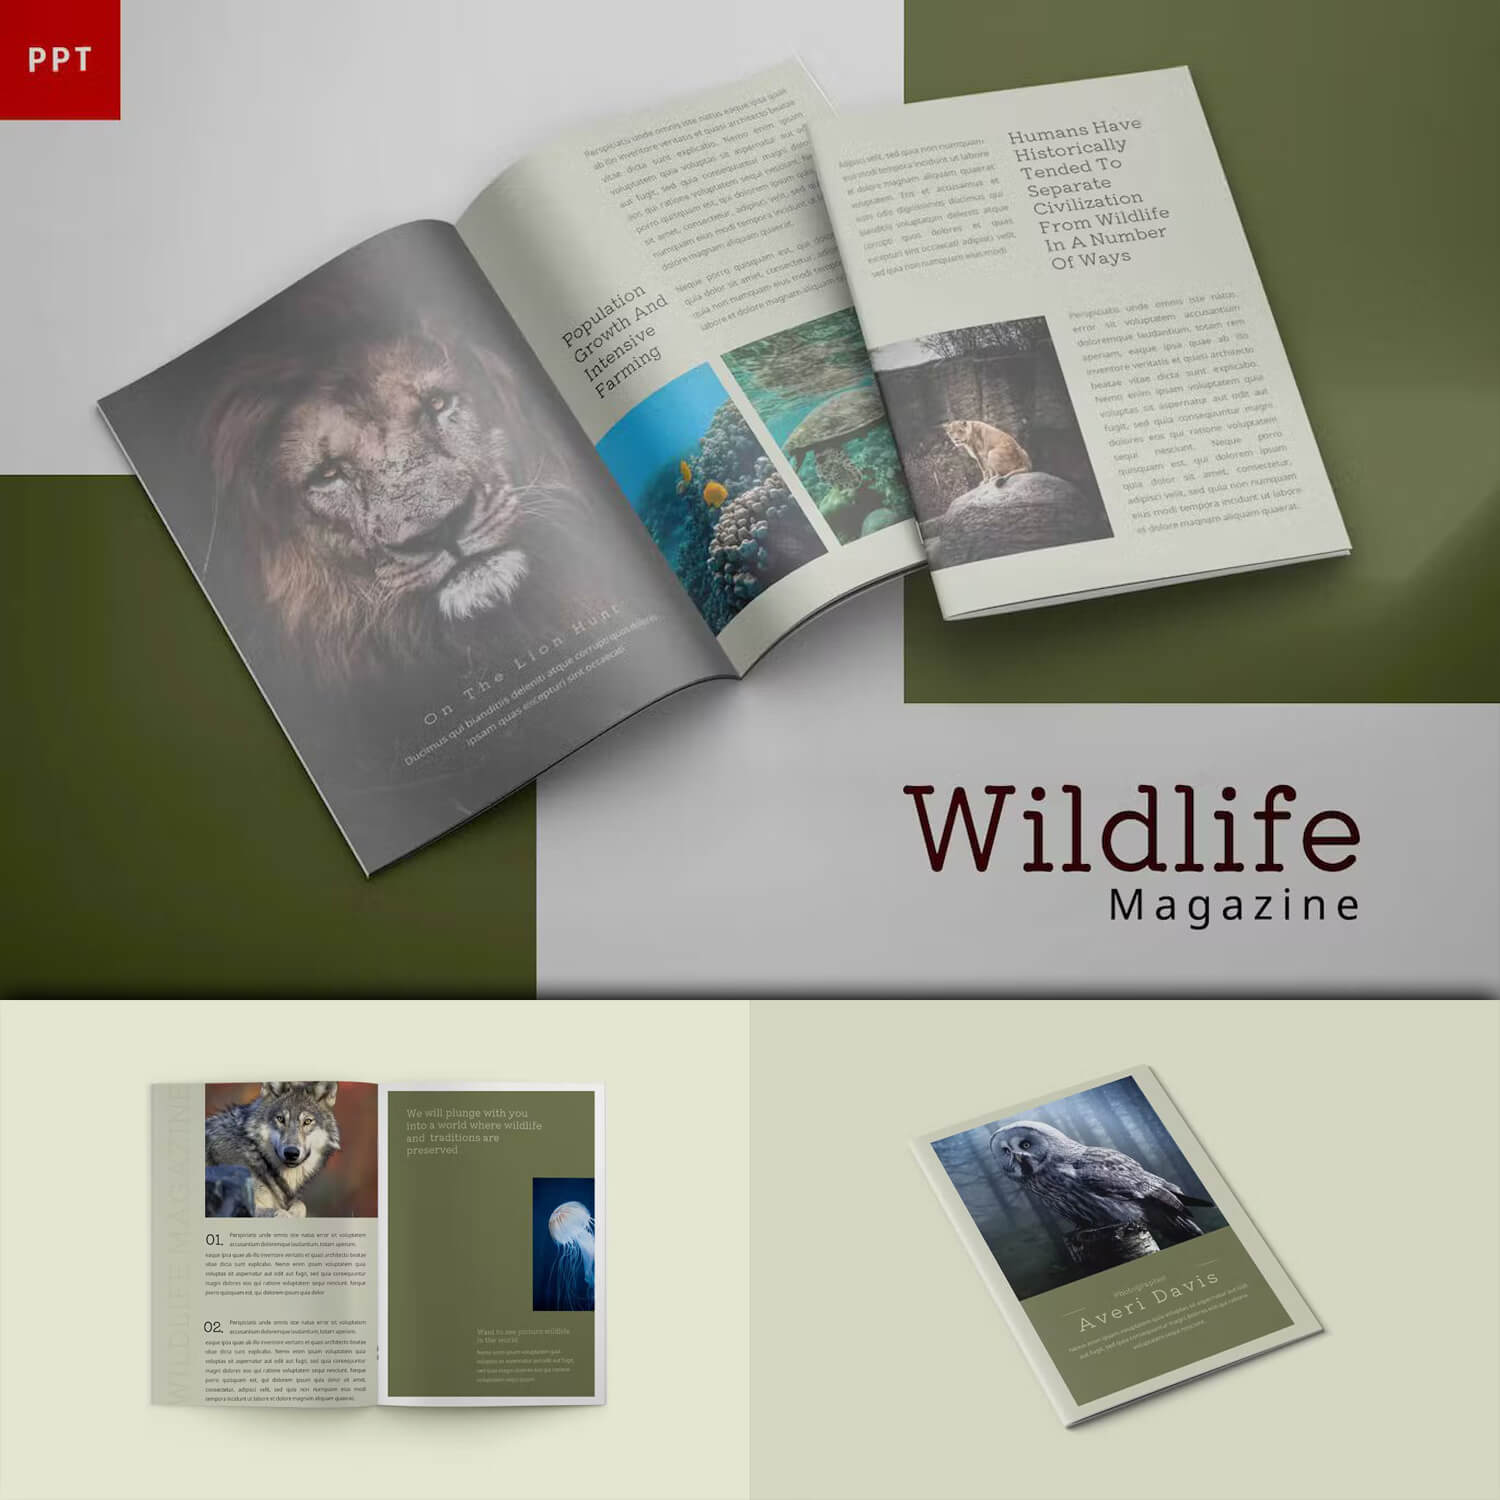 Wildlife magazine powerpoint template.